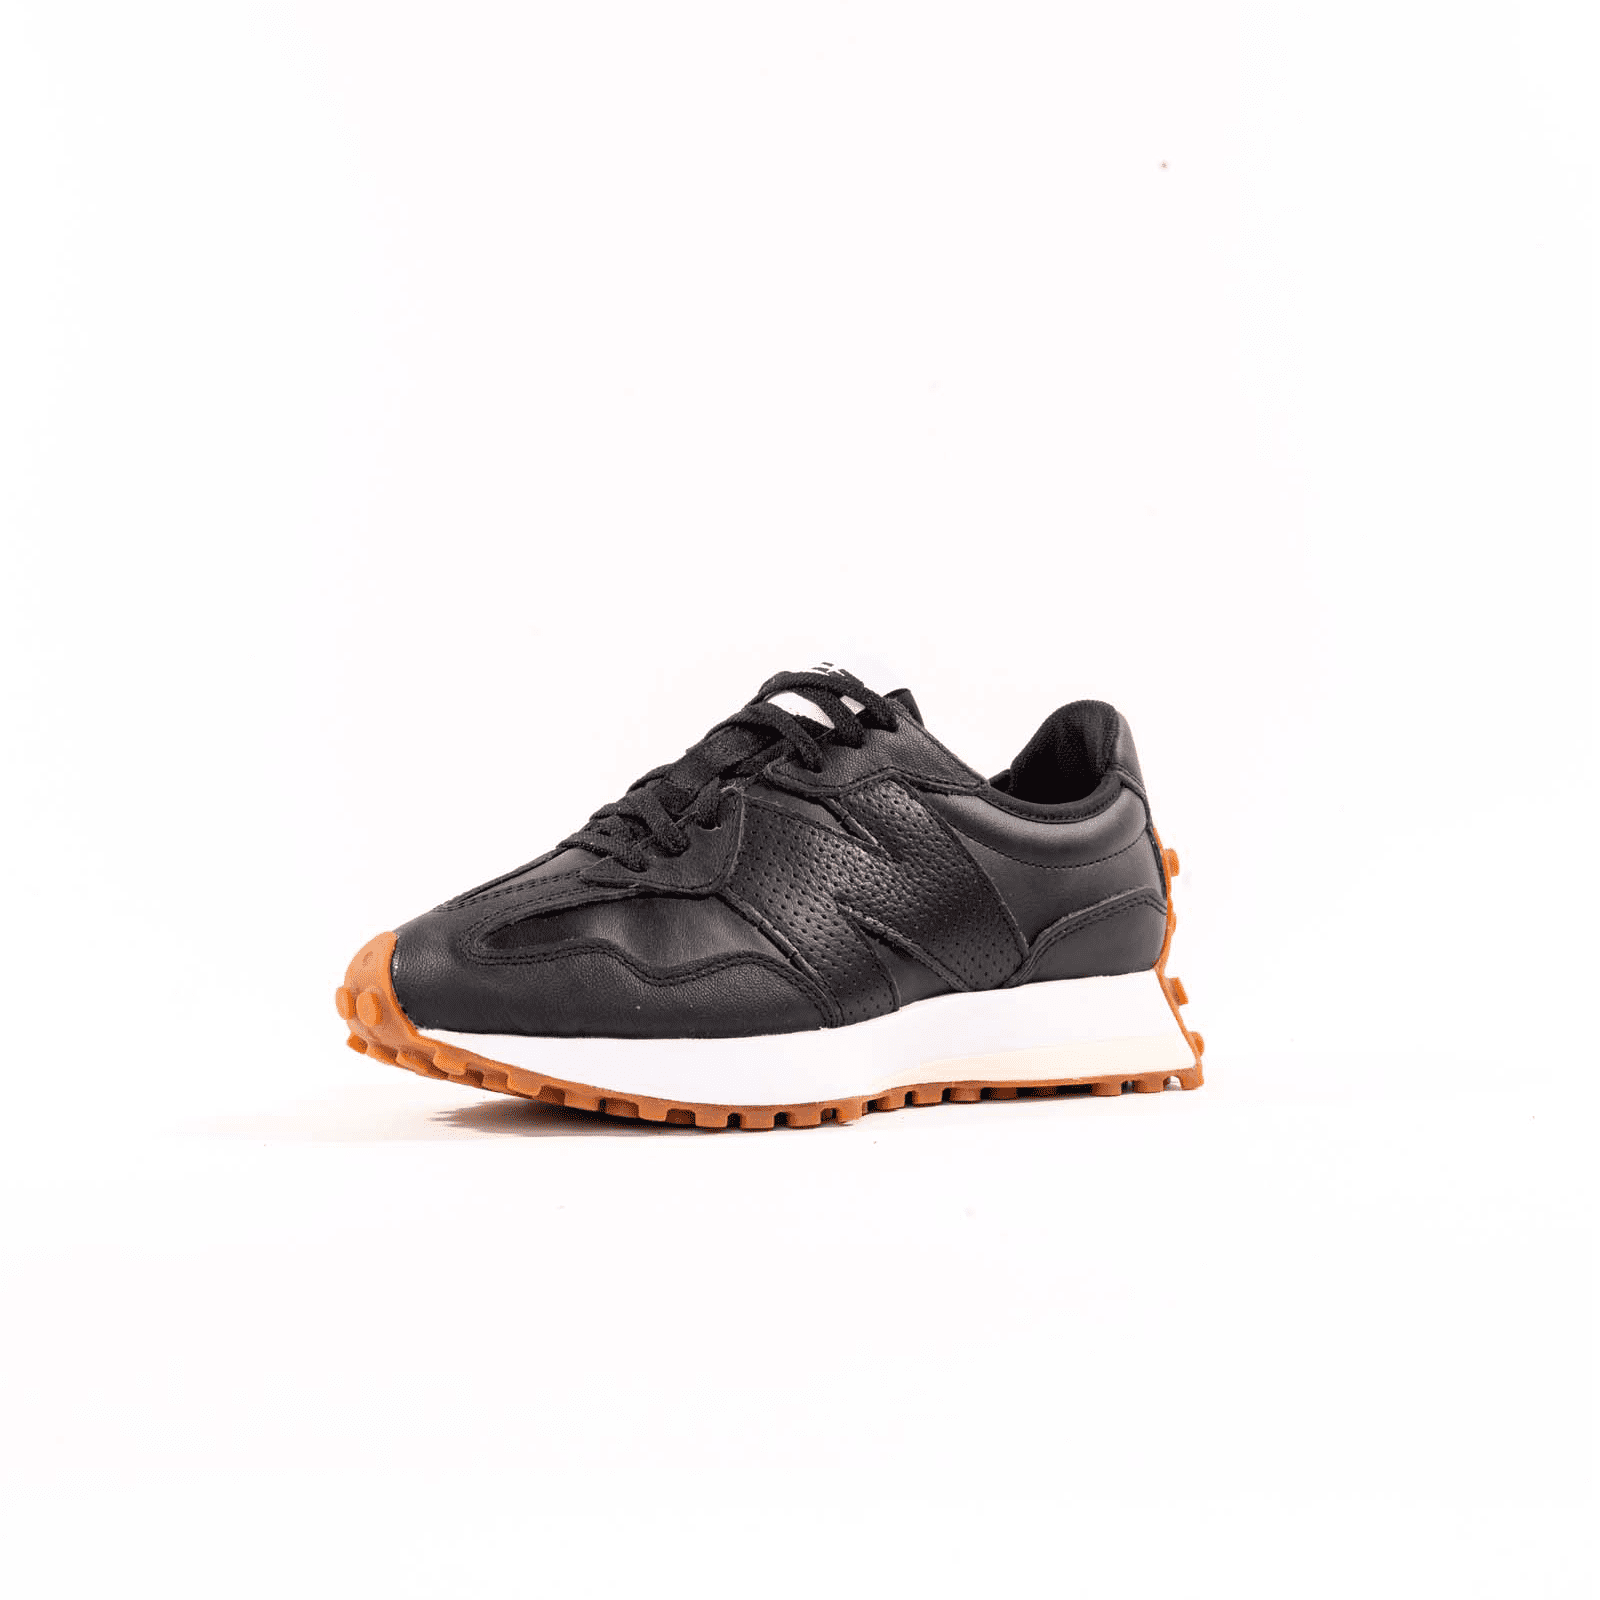 Ws327lh – New Balance | L'Original - Sneakers Shop Belgium